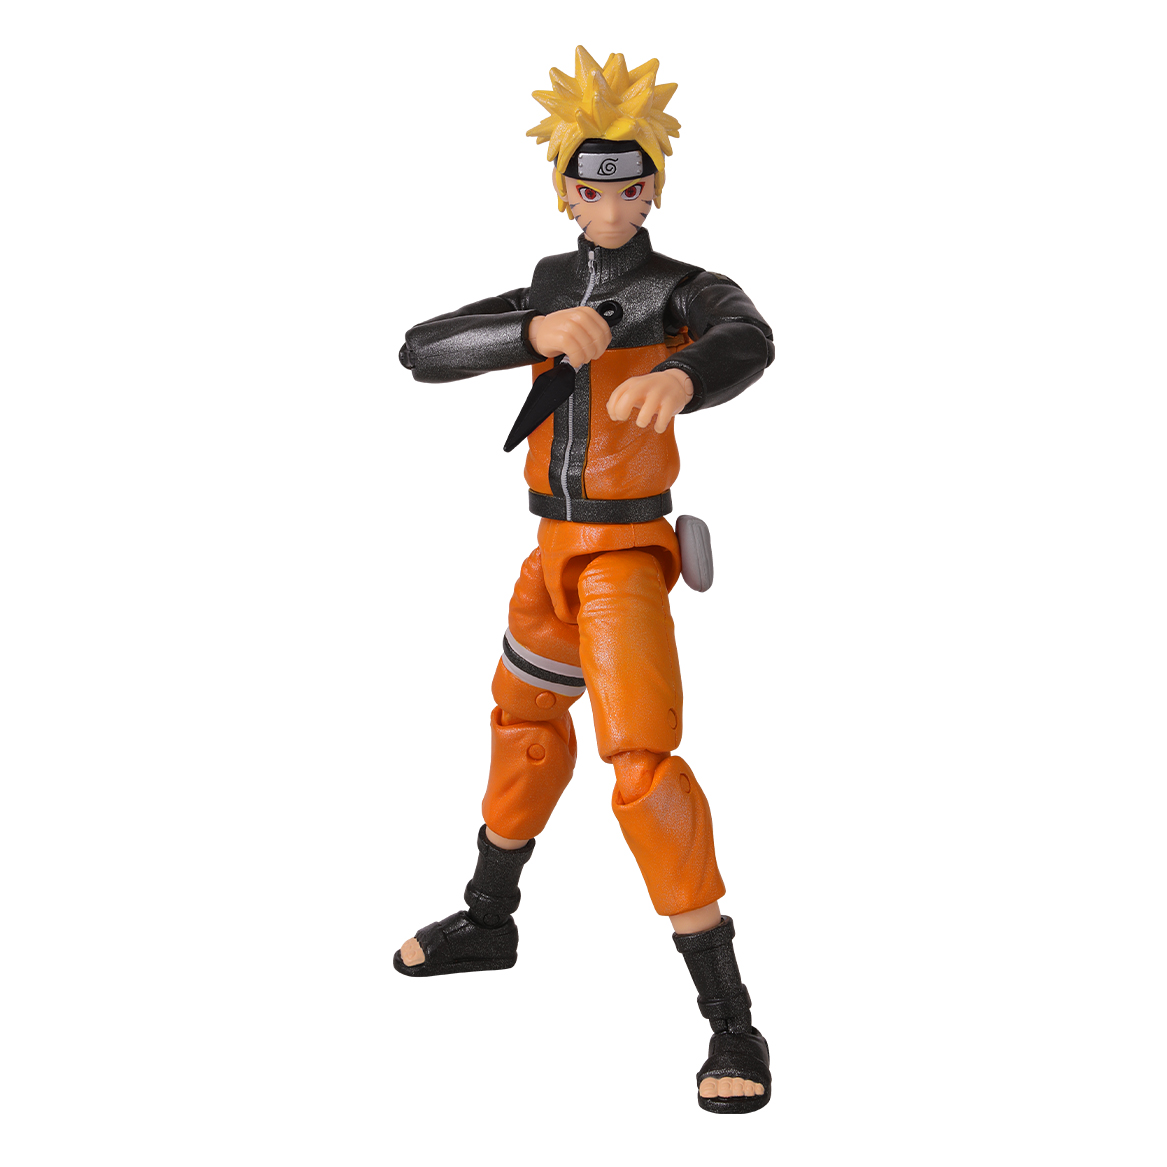 Naruto Shippuden  Anime Heroes Gaara Action Figure  Toys and Collectibles   EB Games Australia